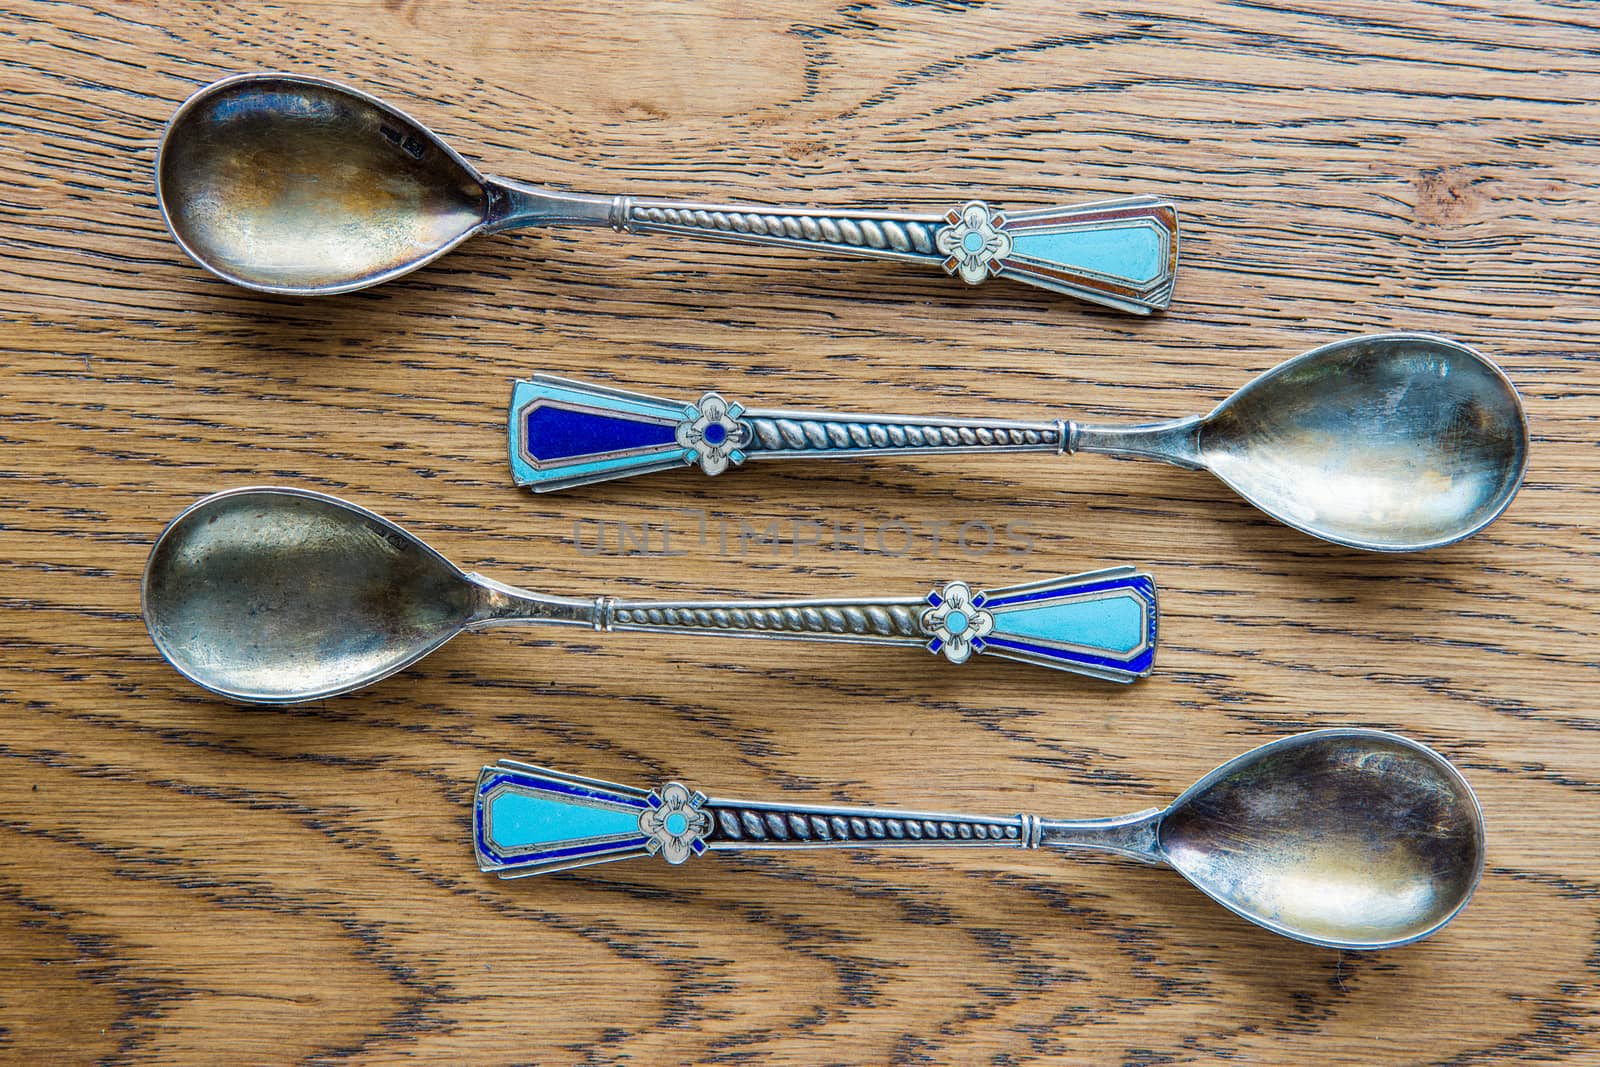 Antique, decorative spoons by ben44